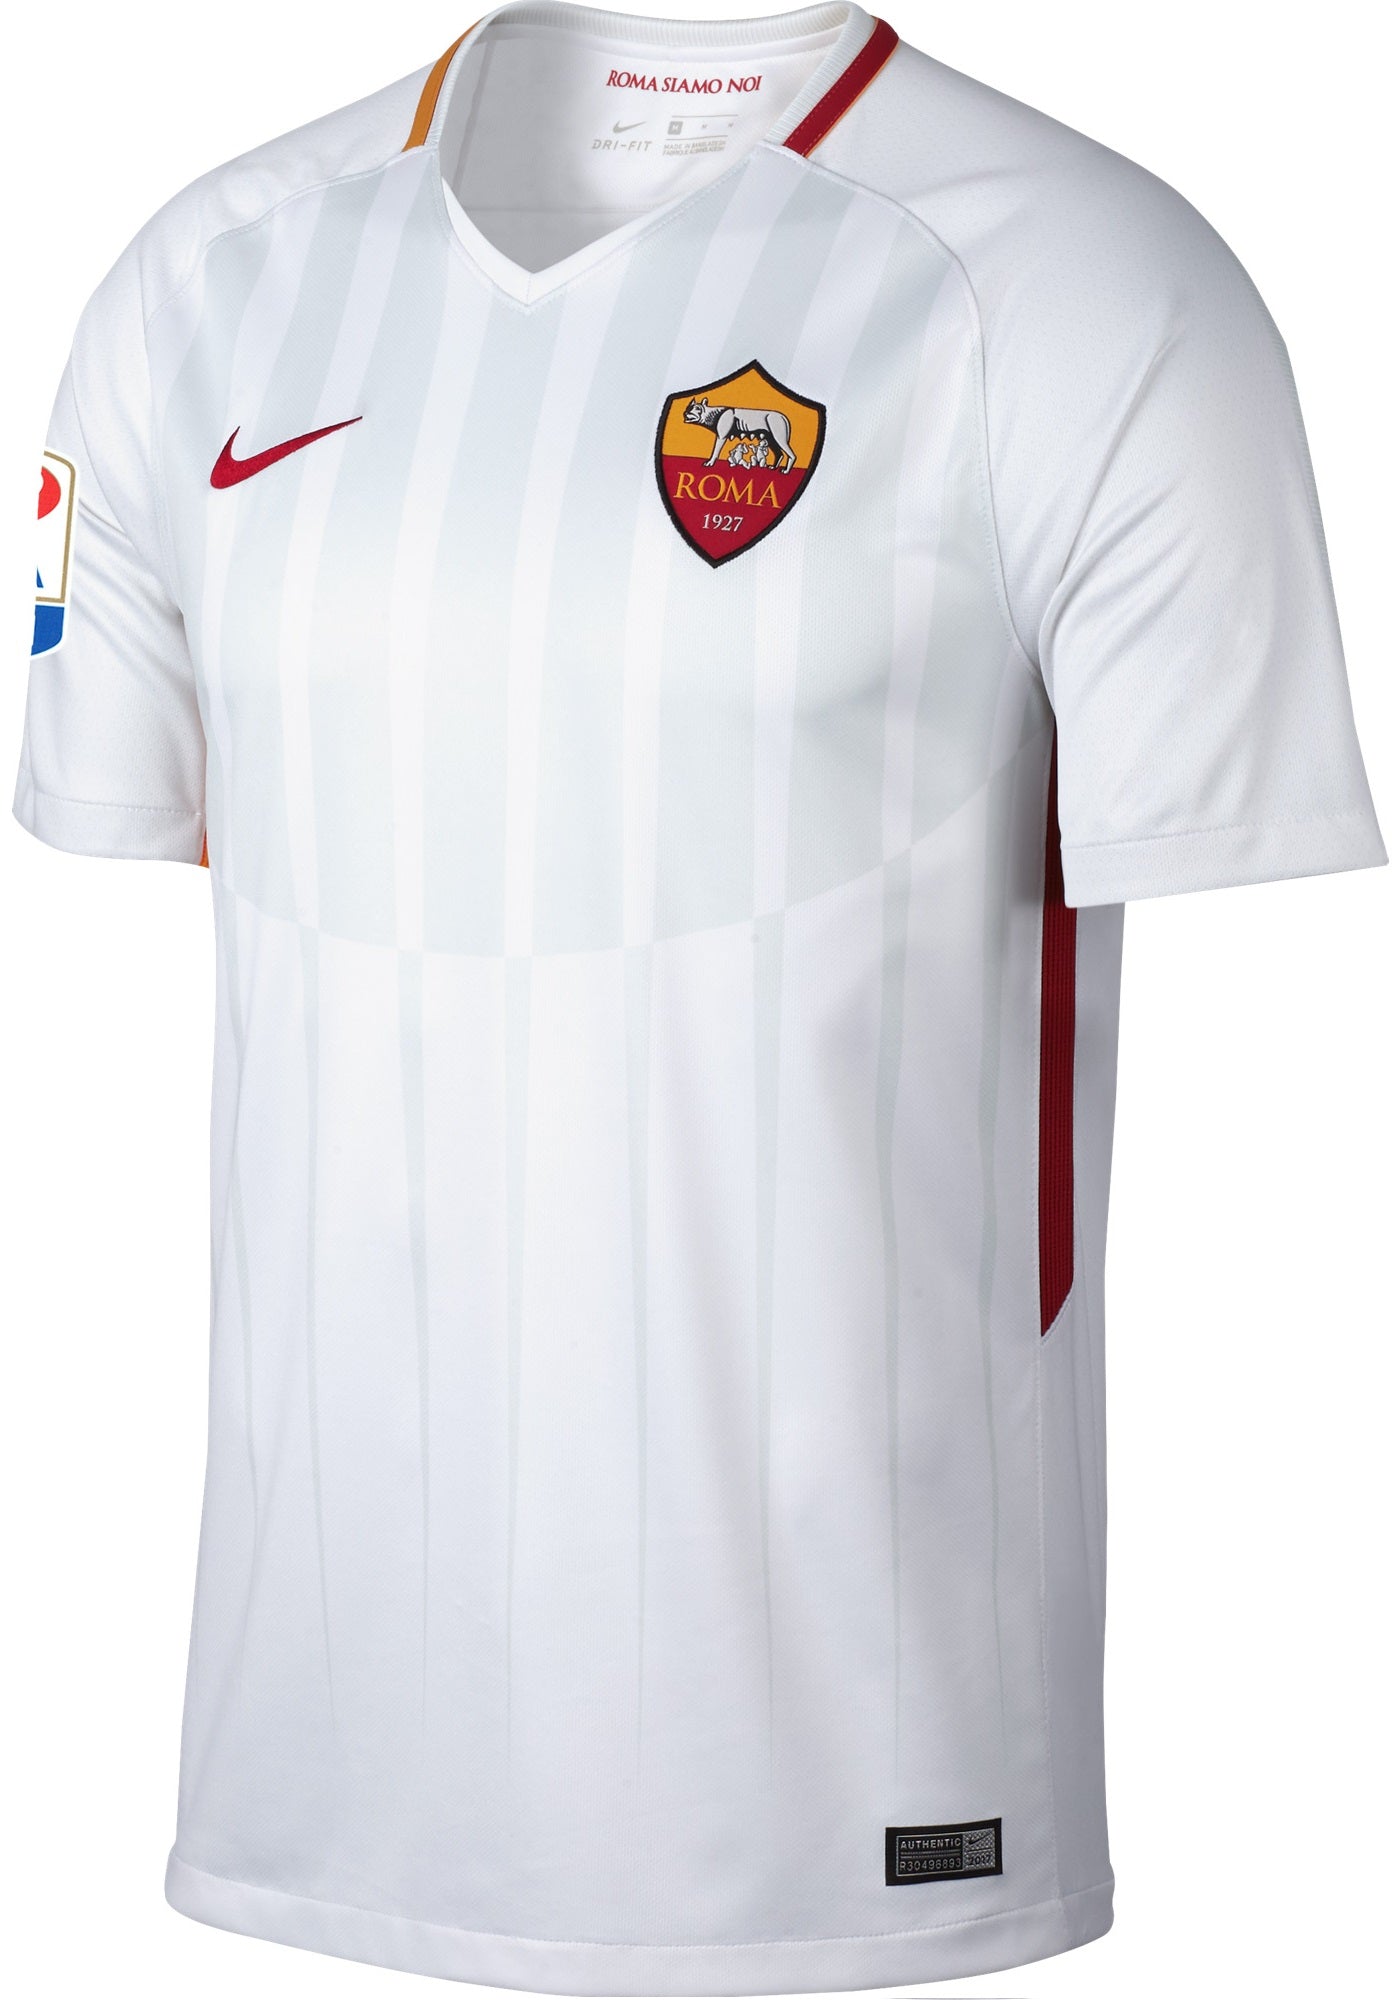 NIKE 847283-100 AS Roma Football Soccer 